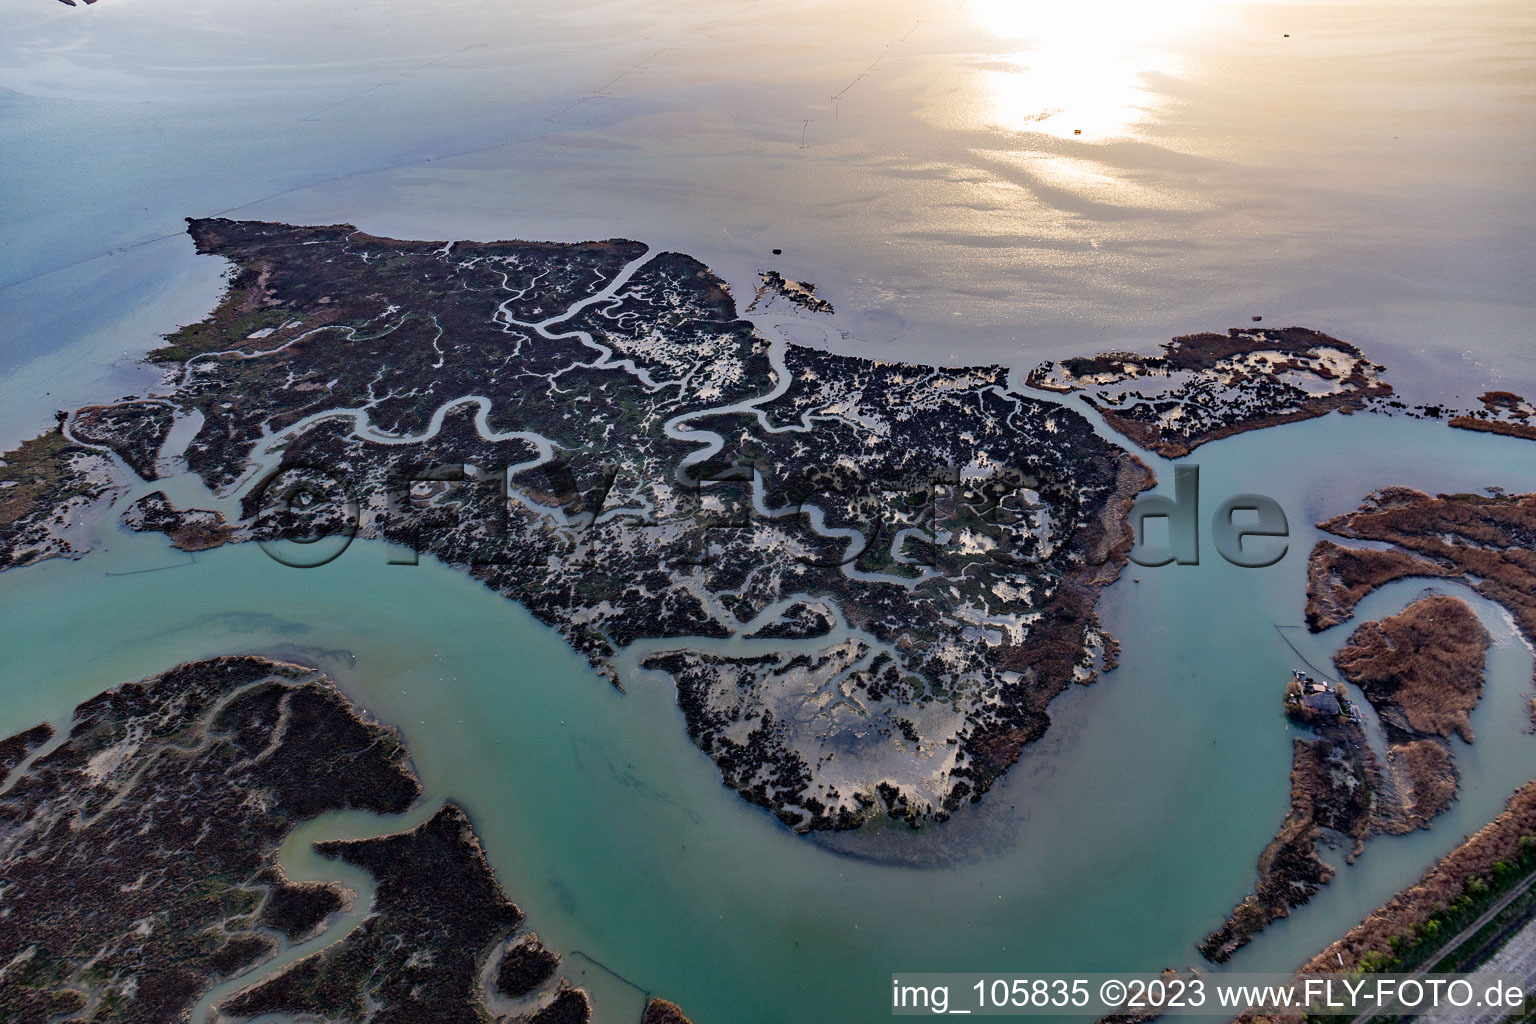 Marsh islands at the seaside Laguna Marano in Marano Lagunare in Friaul-Julisch Venetien, Italy